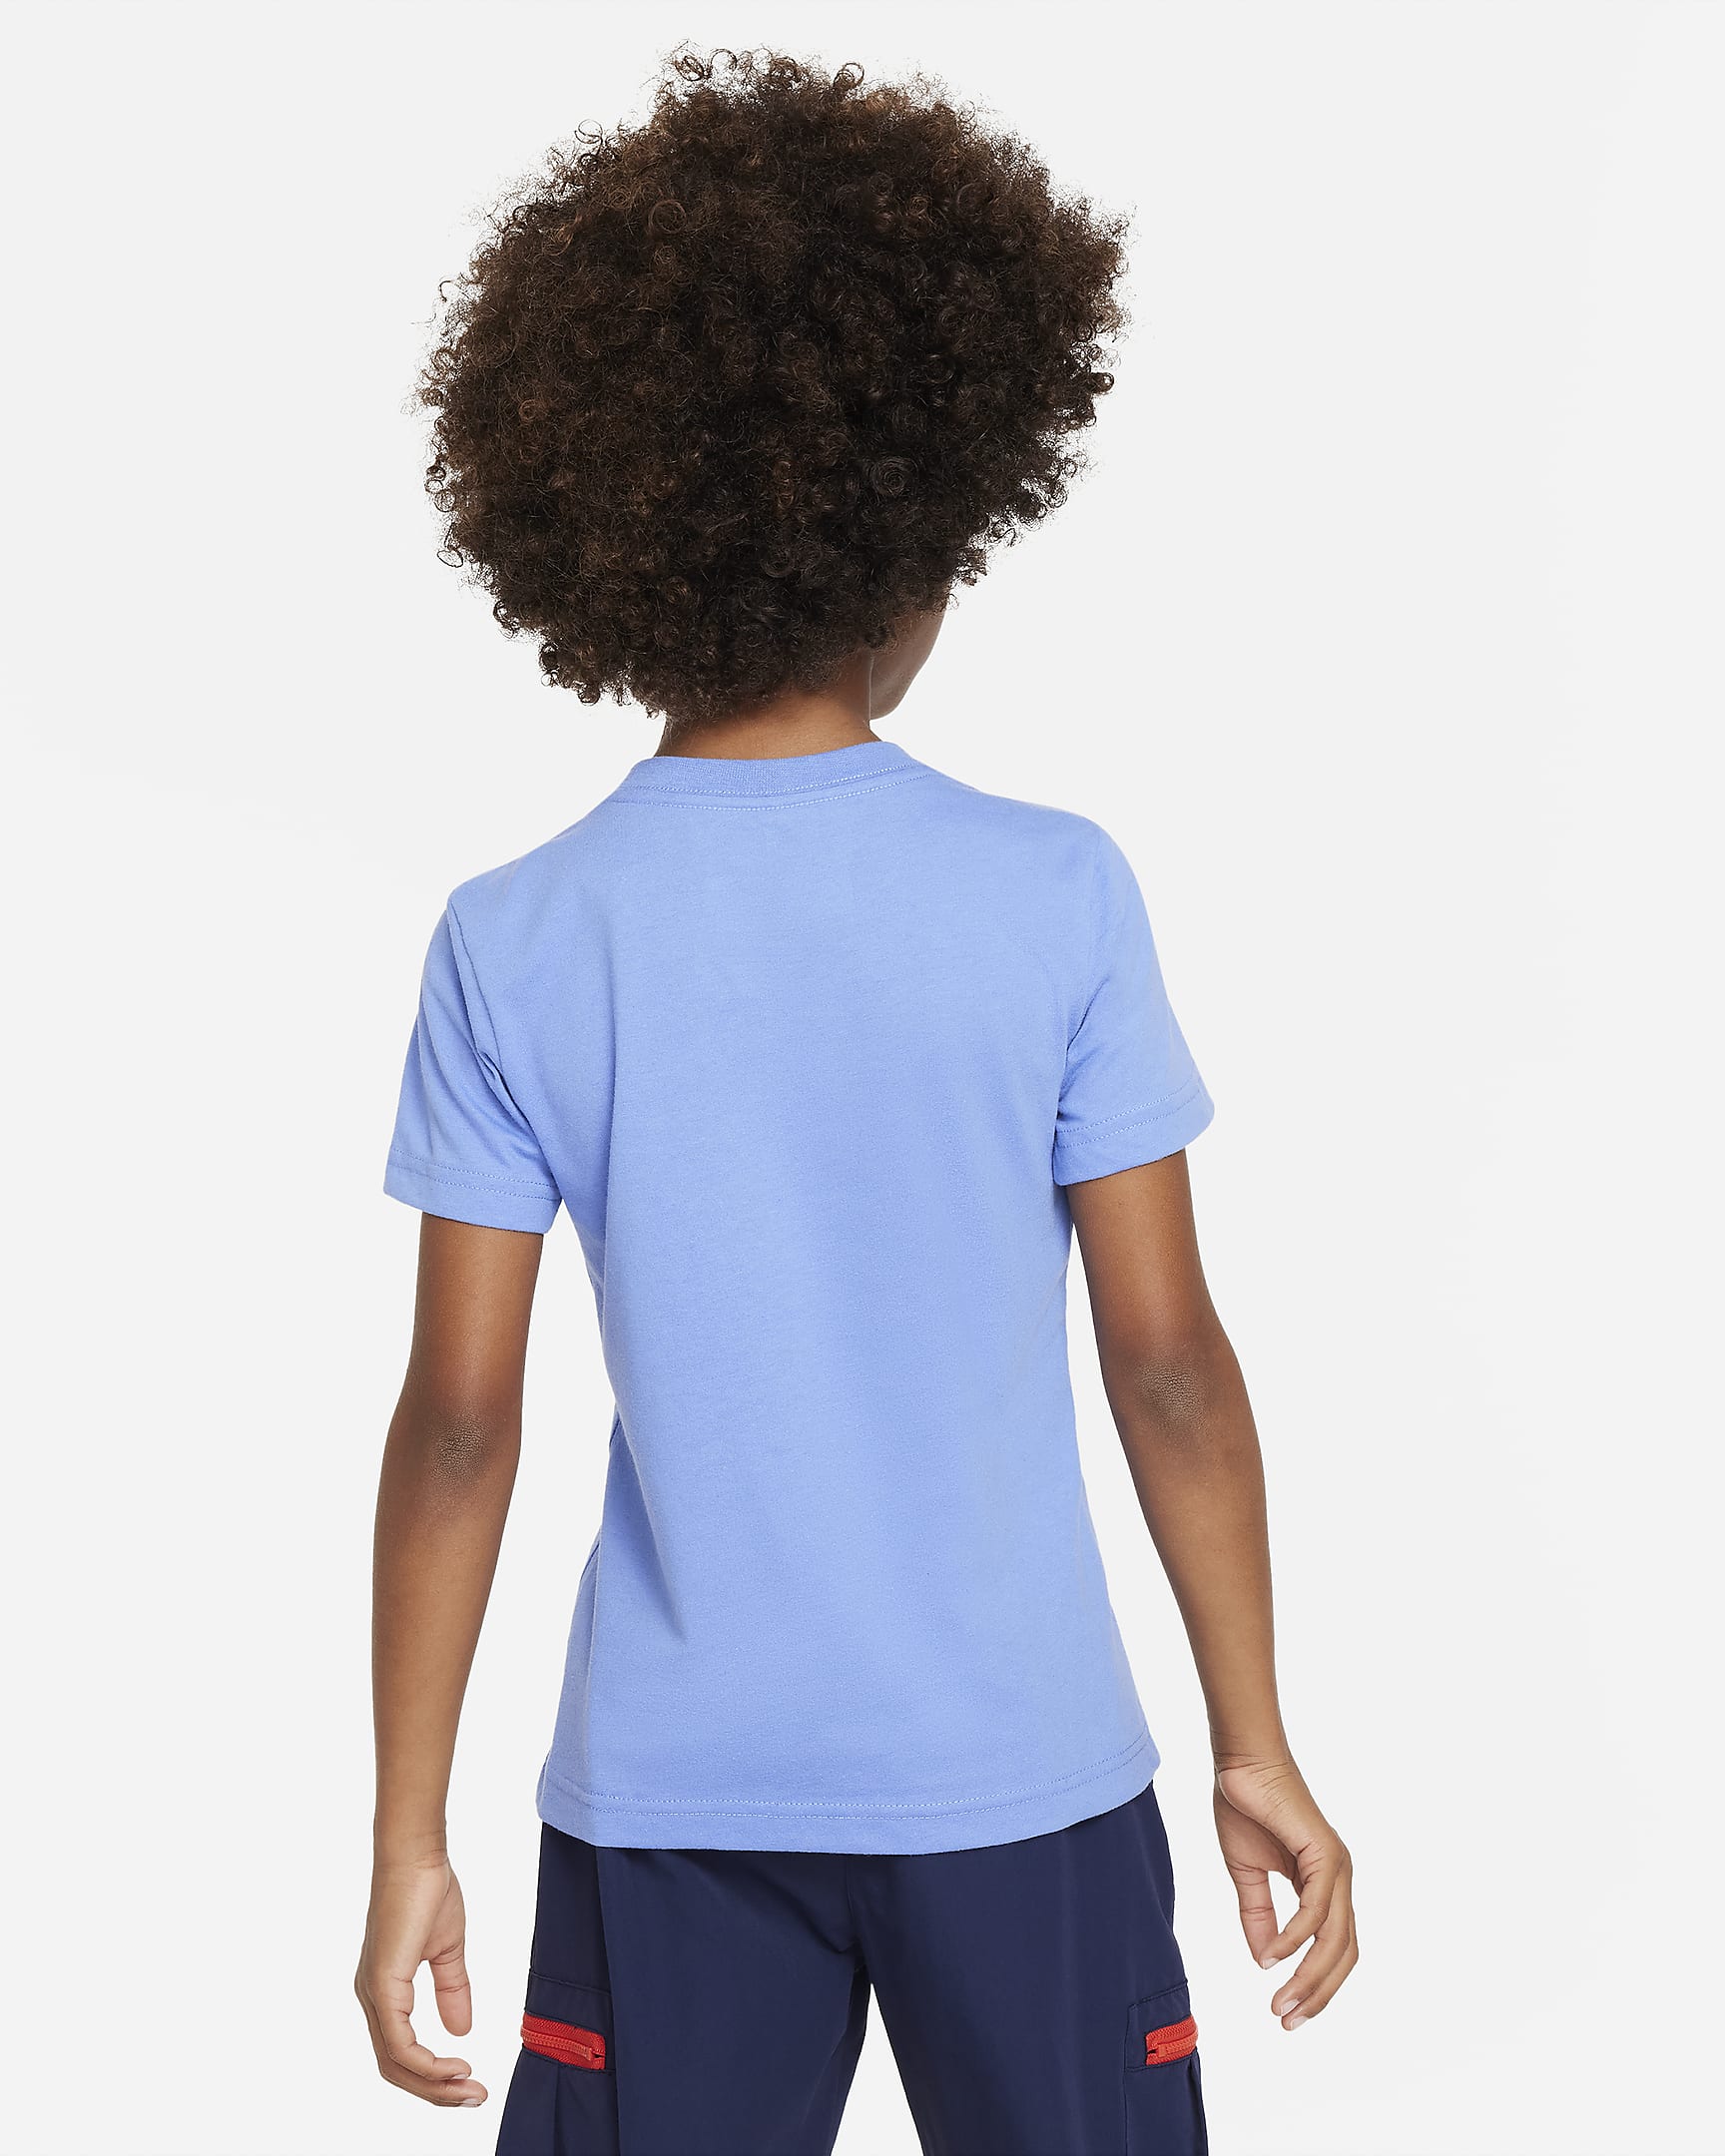 Nike Brandmark Square Basic Tee Little Kids T-Shirt. Nike.com